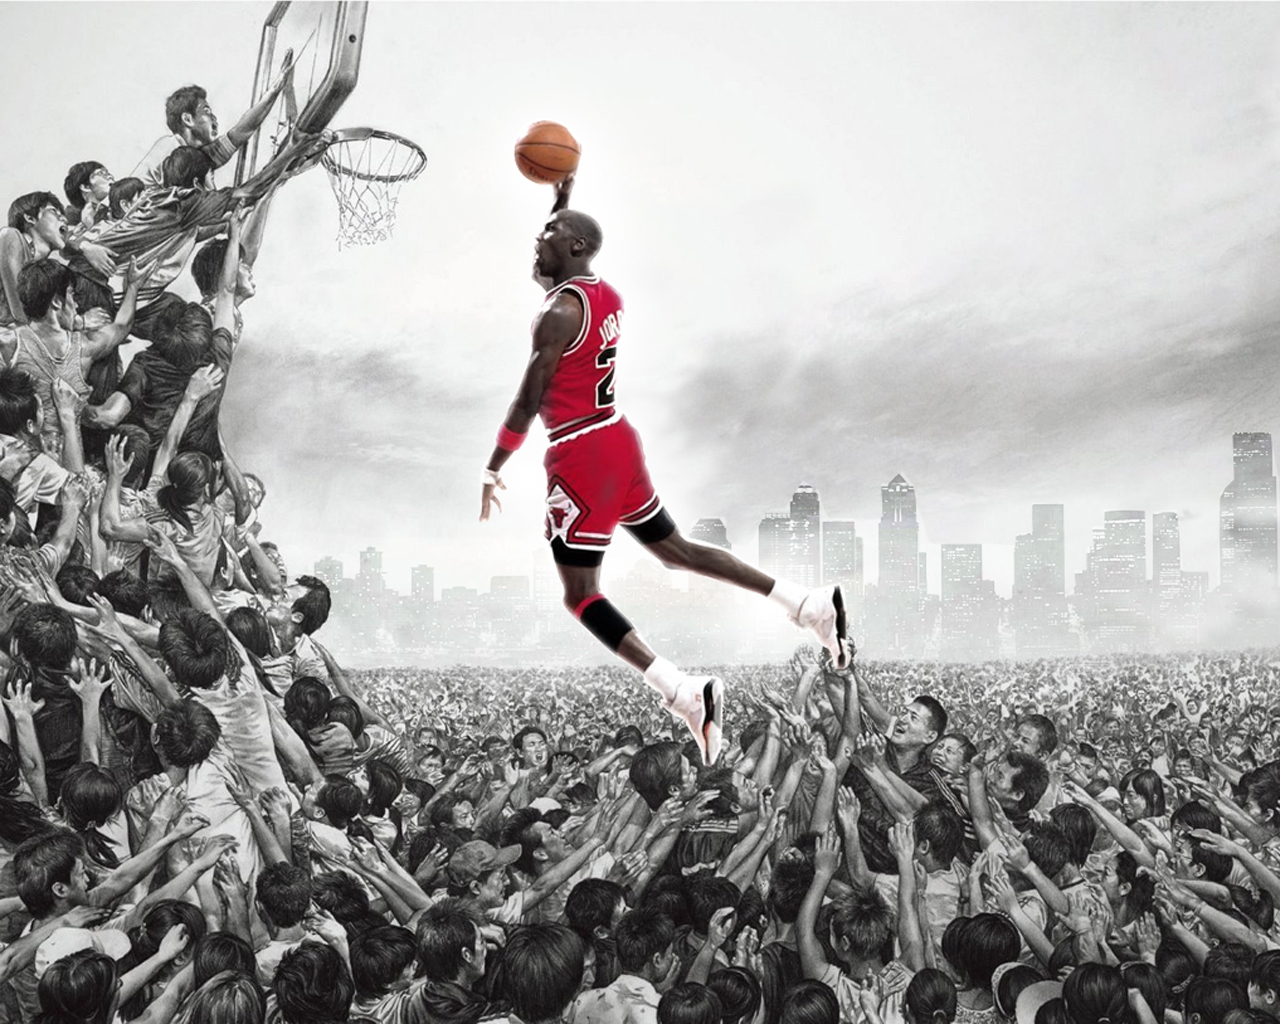 Michael Jordan Basketball Player, Biography | Sports Stars